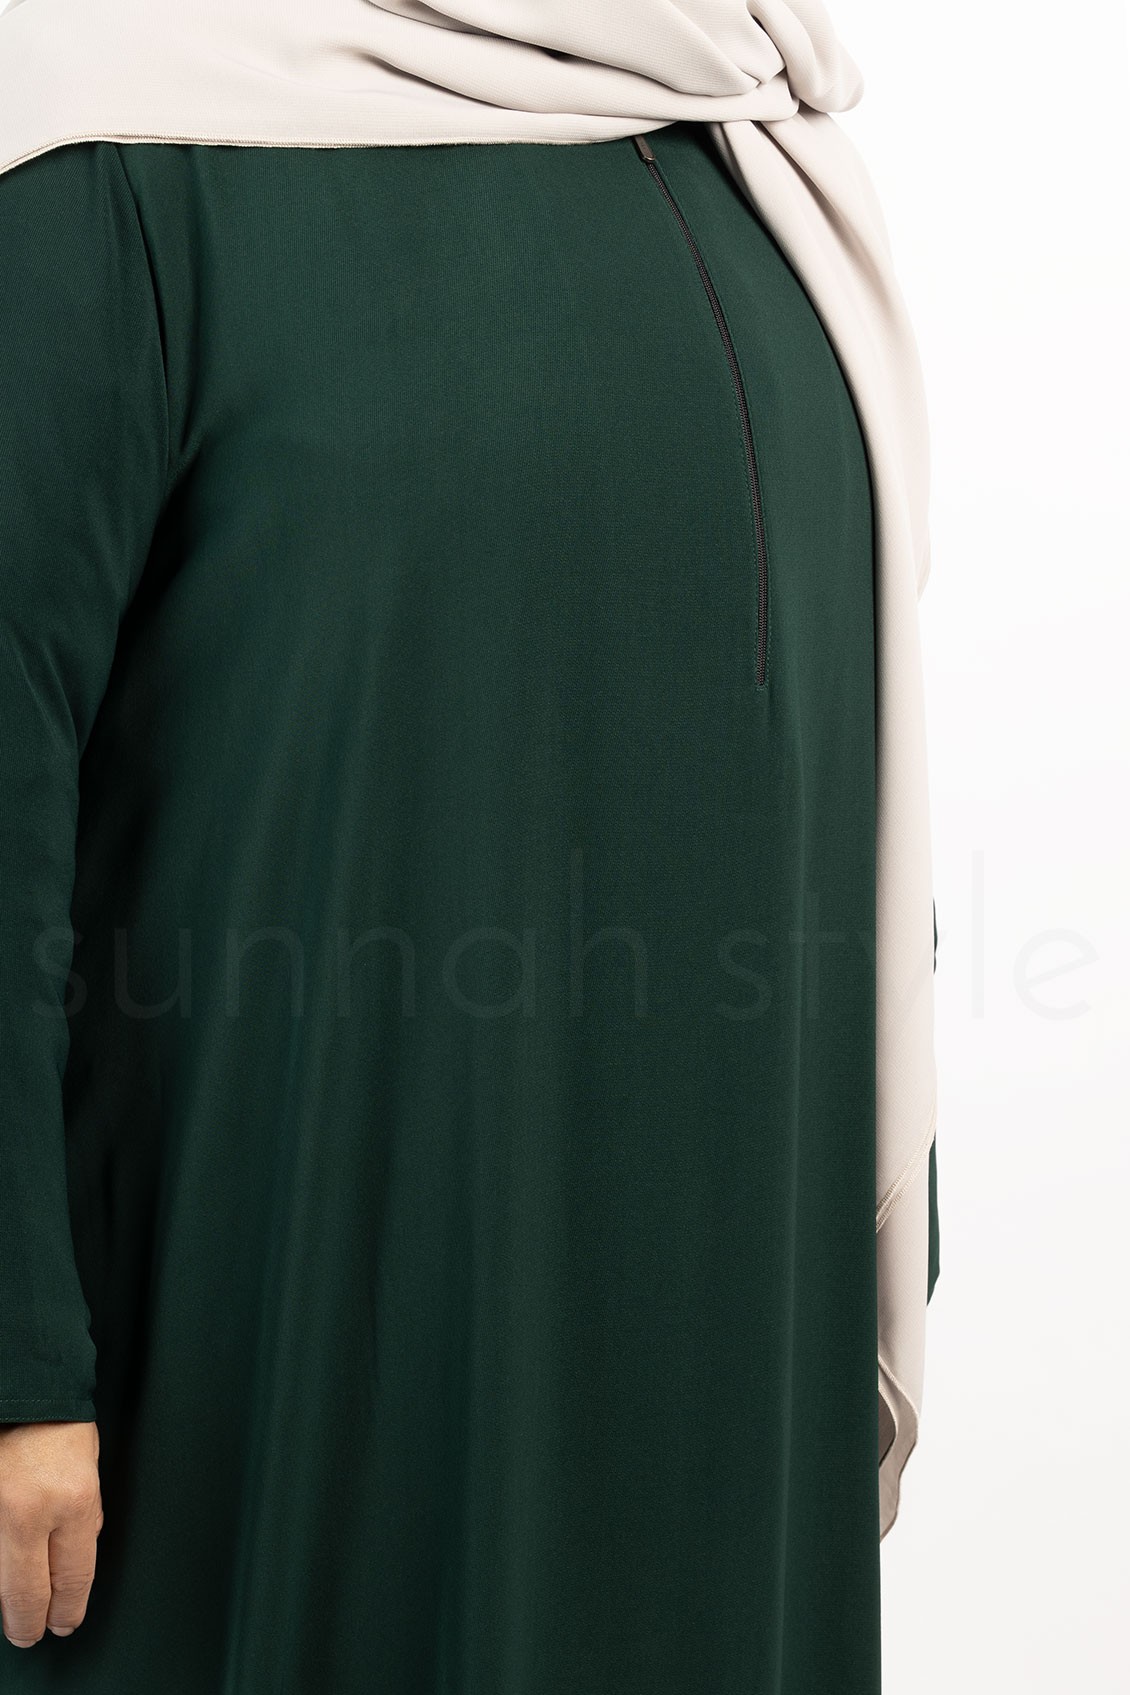 Sunnah Style Essentials Closed Abaya Plus Pine